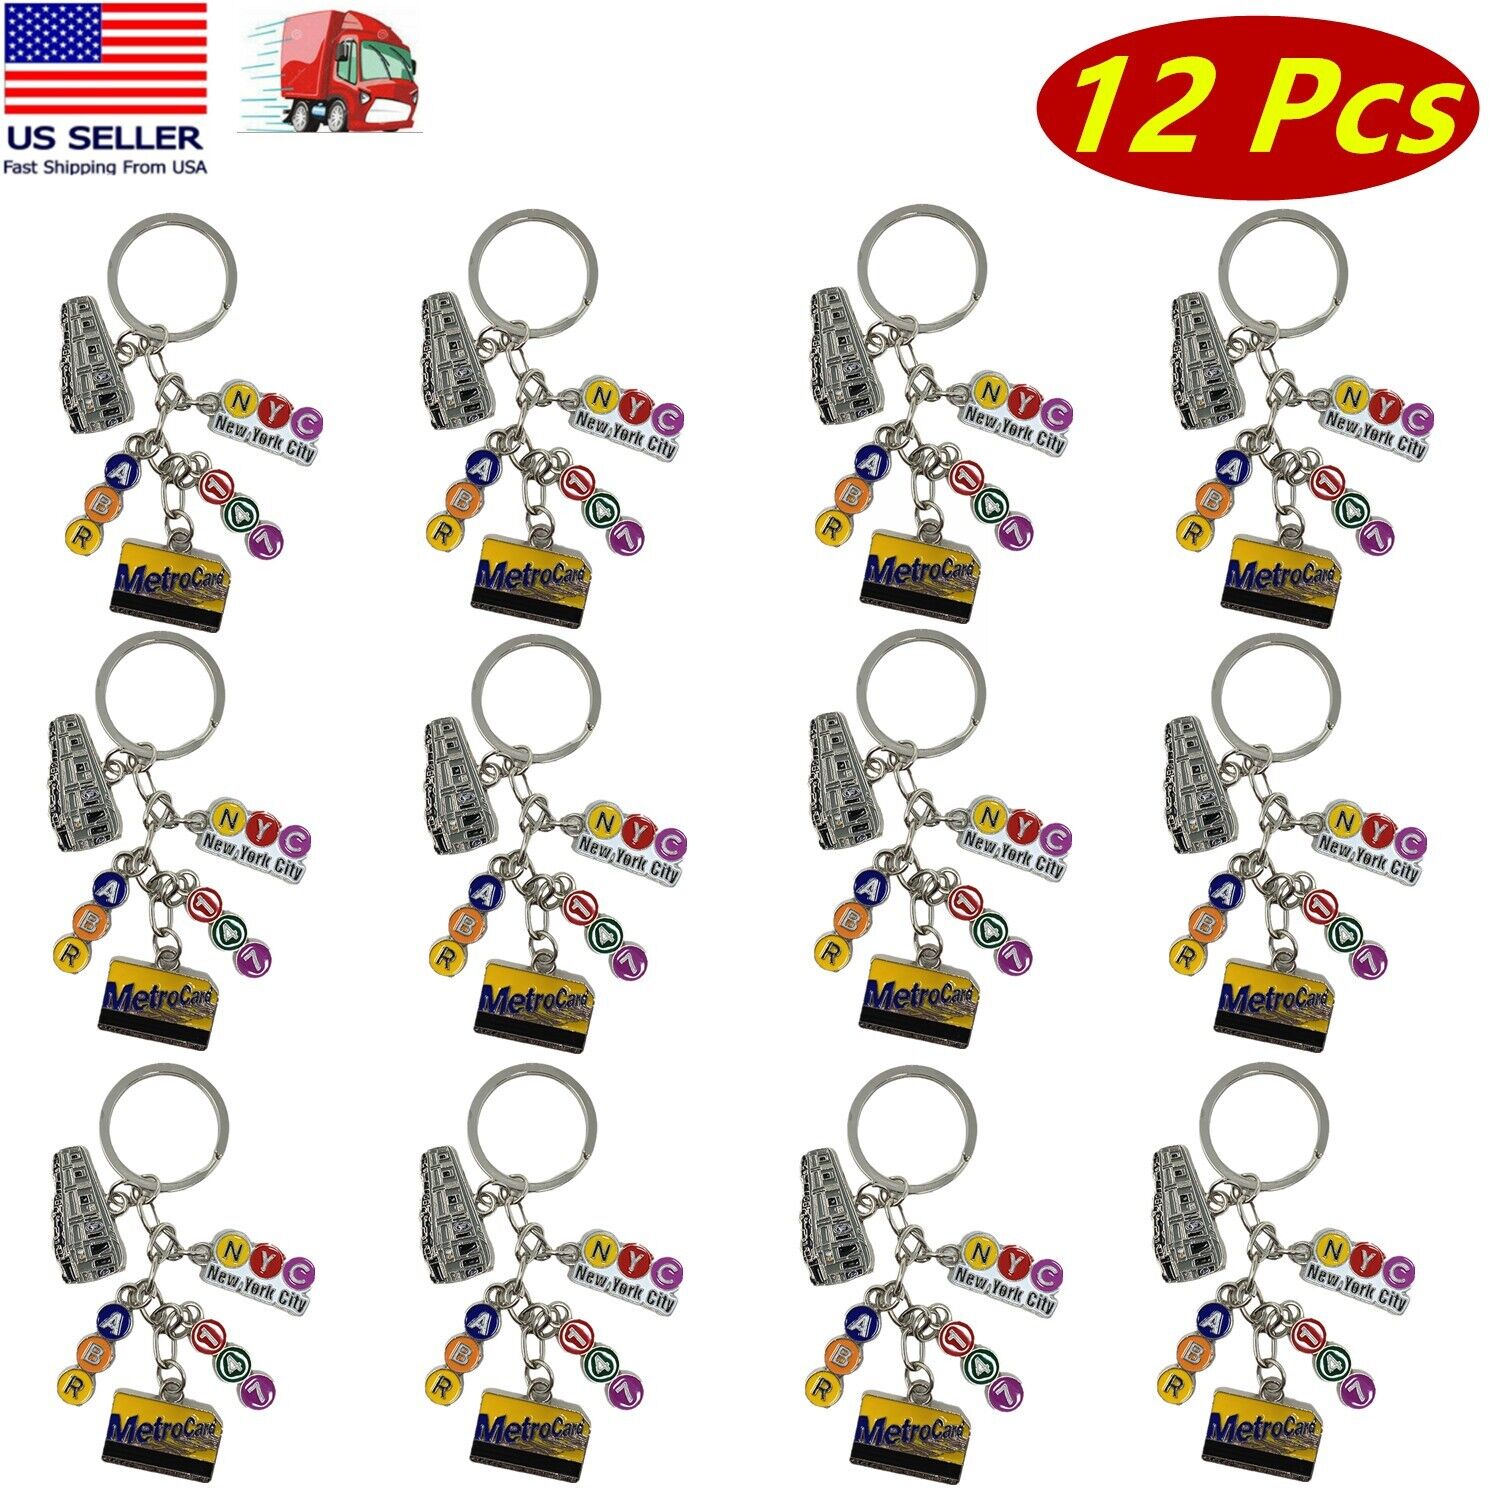 12 Pcs Metal New York City Subway Key Chain 5 Charms, NYC Keychain Souvenir